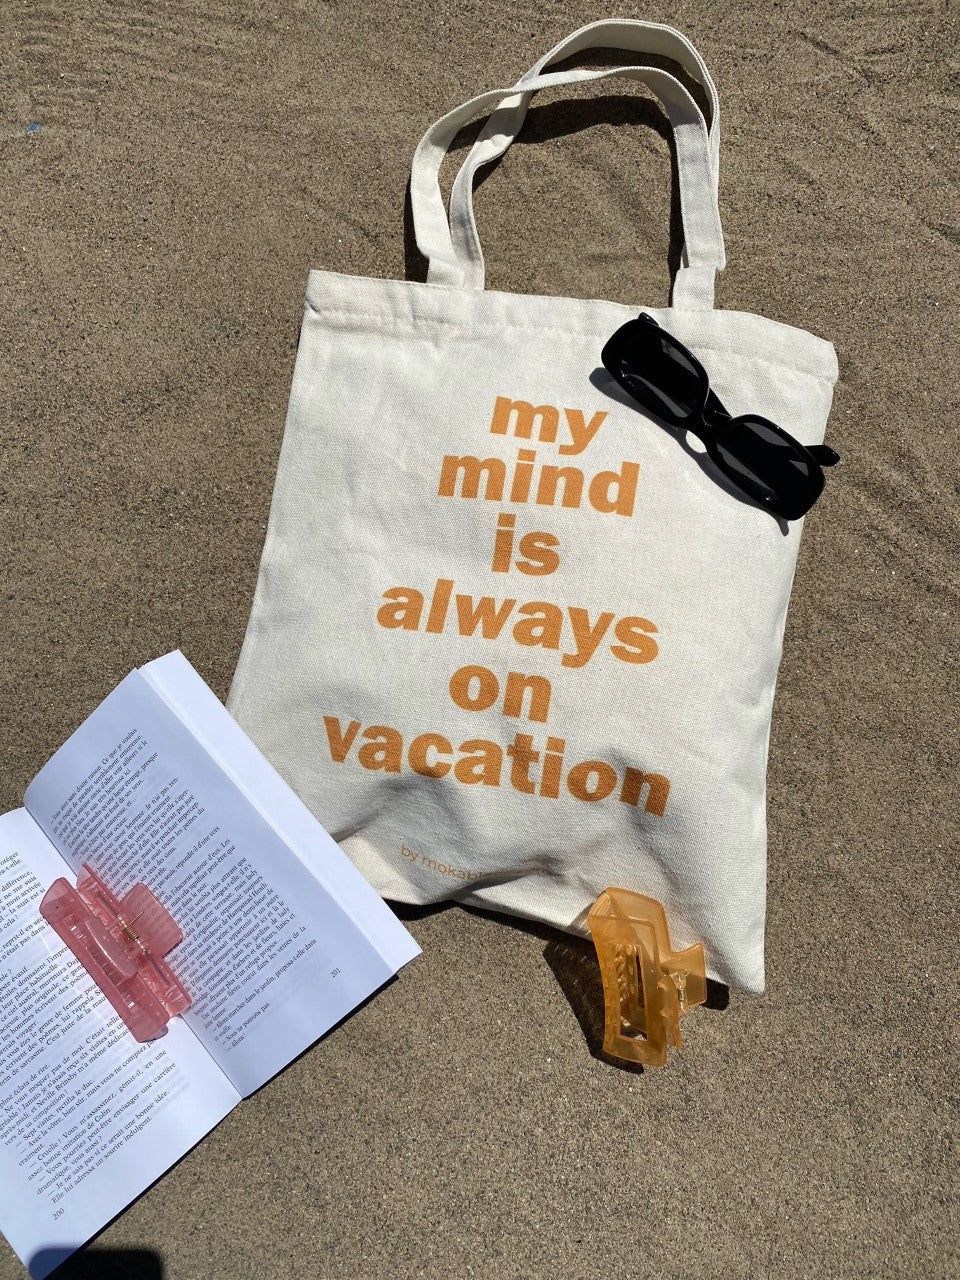 Vacation mind